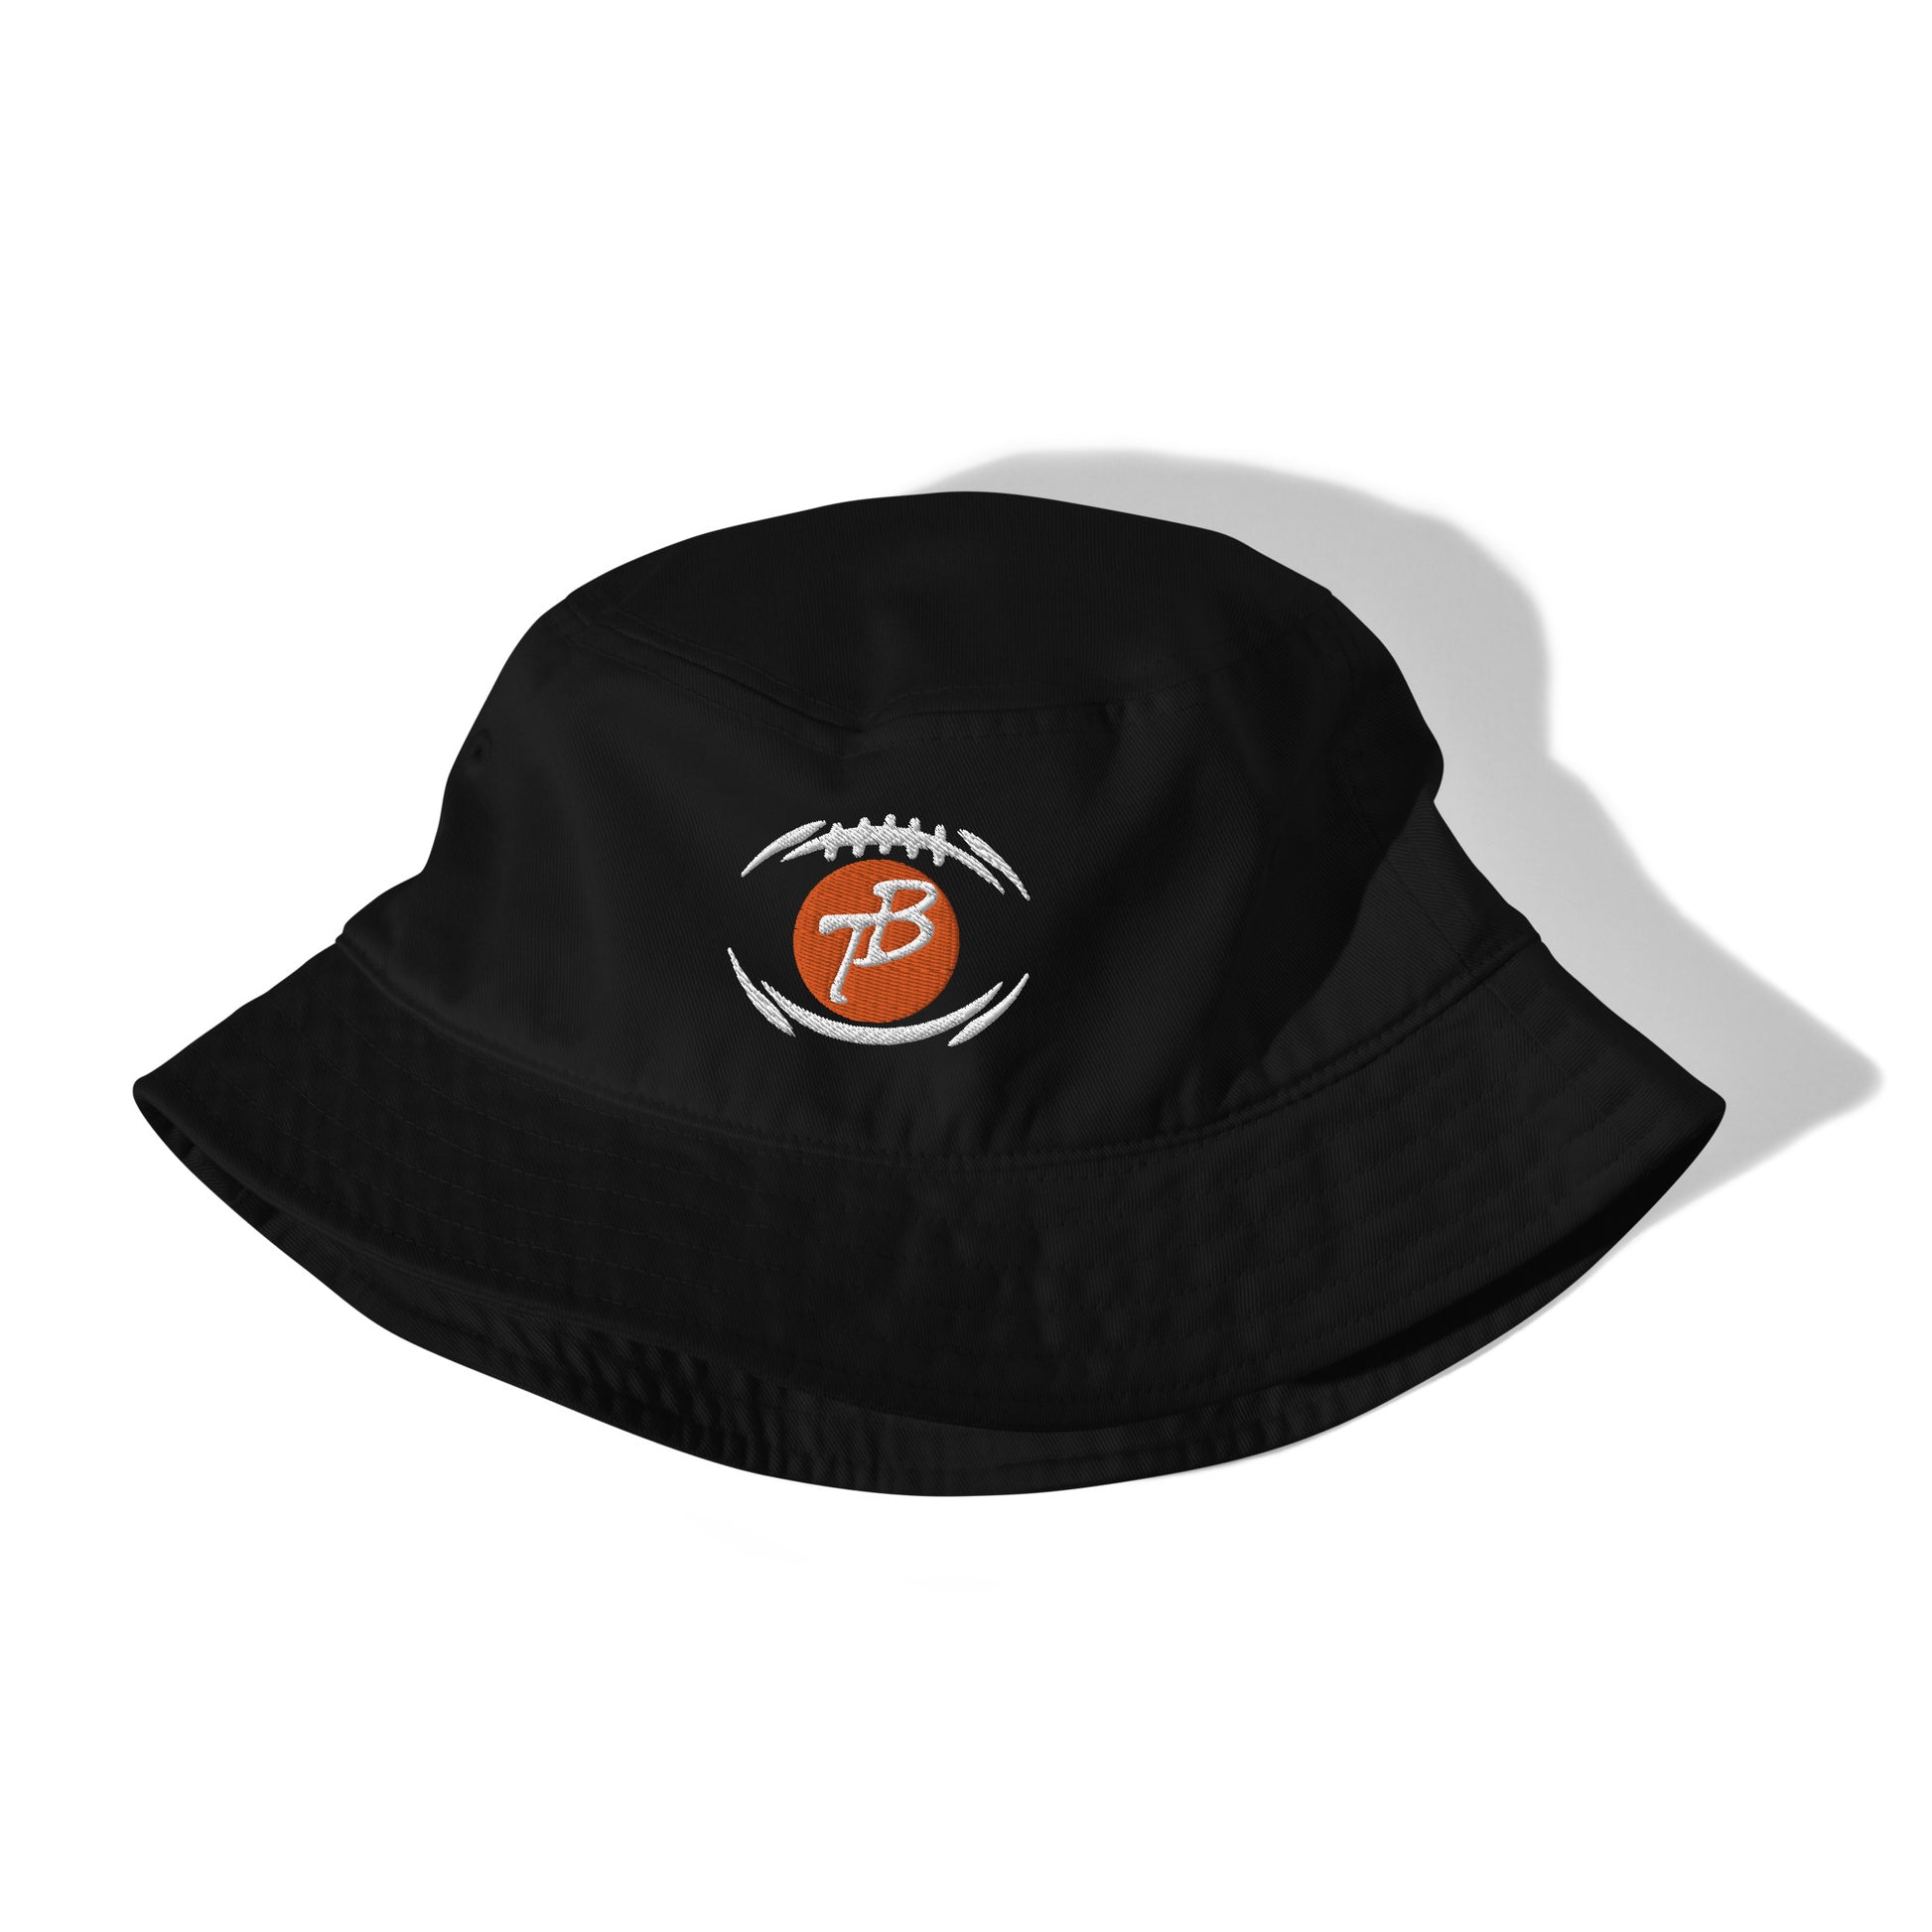 Terry Bradshaw hat / Terry Bradshaw Organic bucket hat